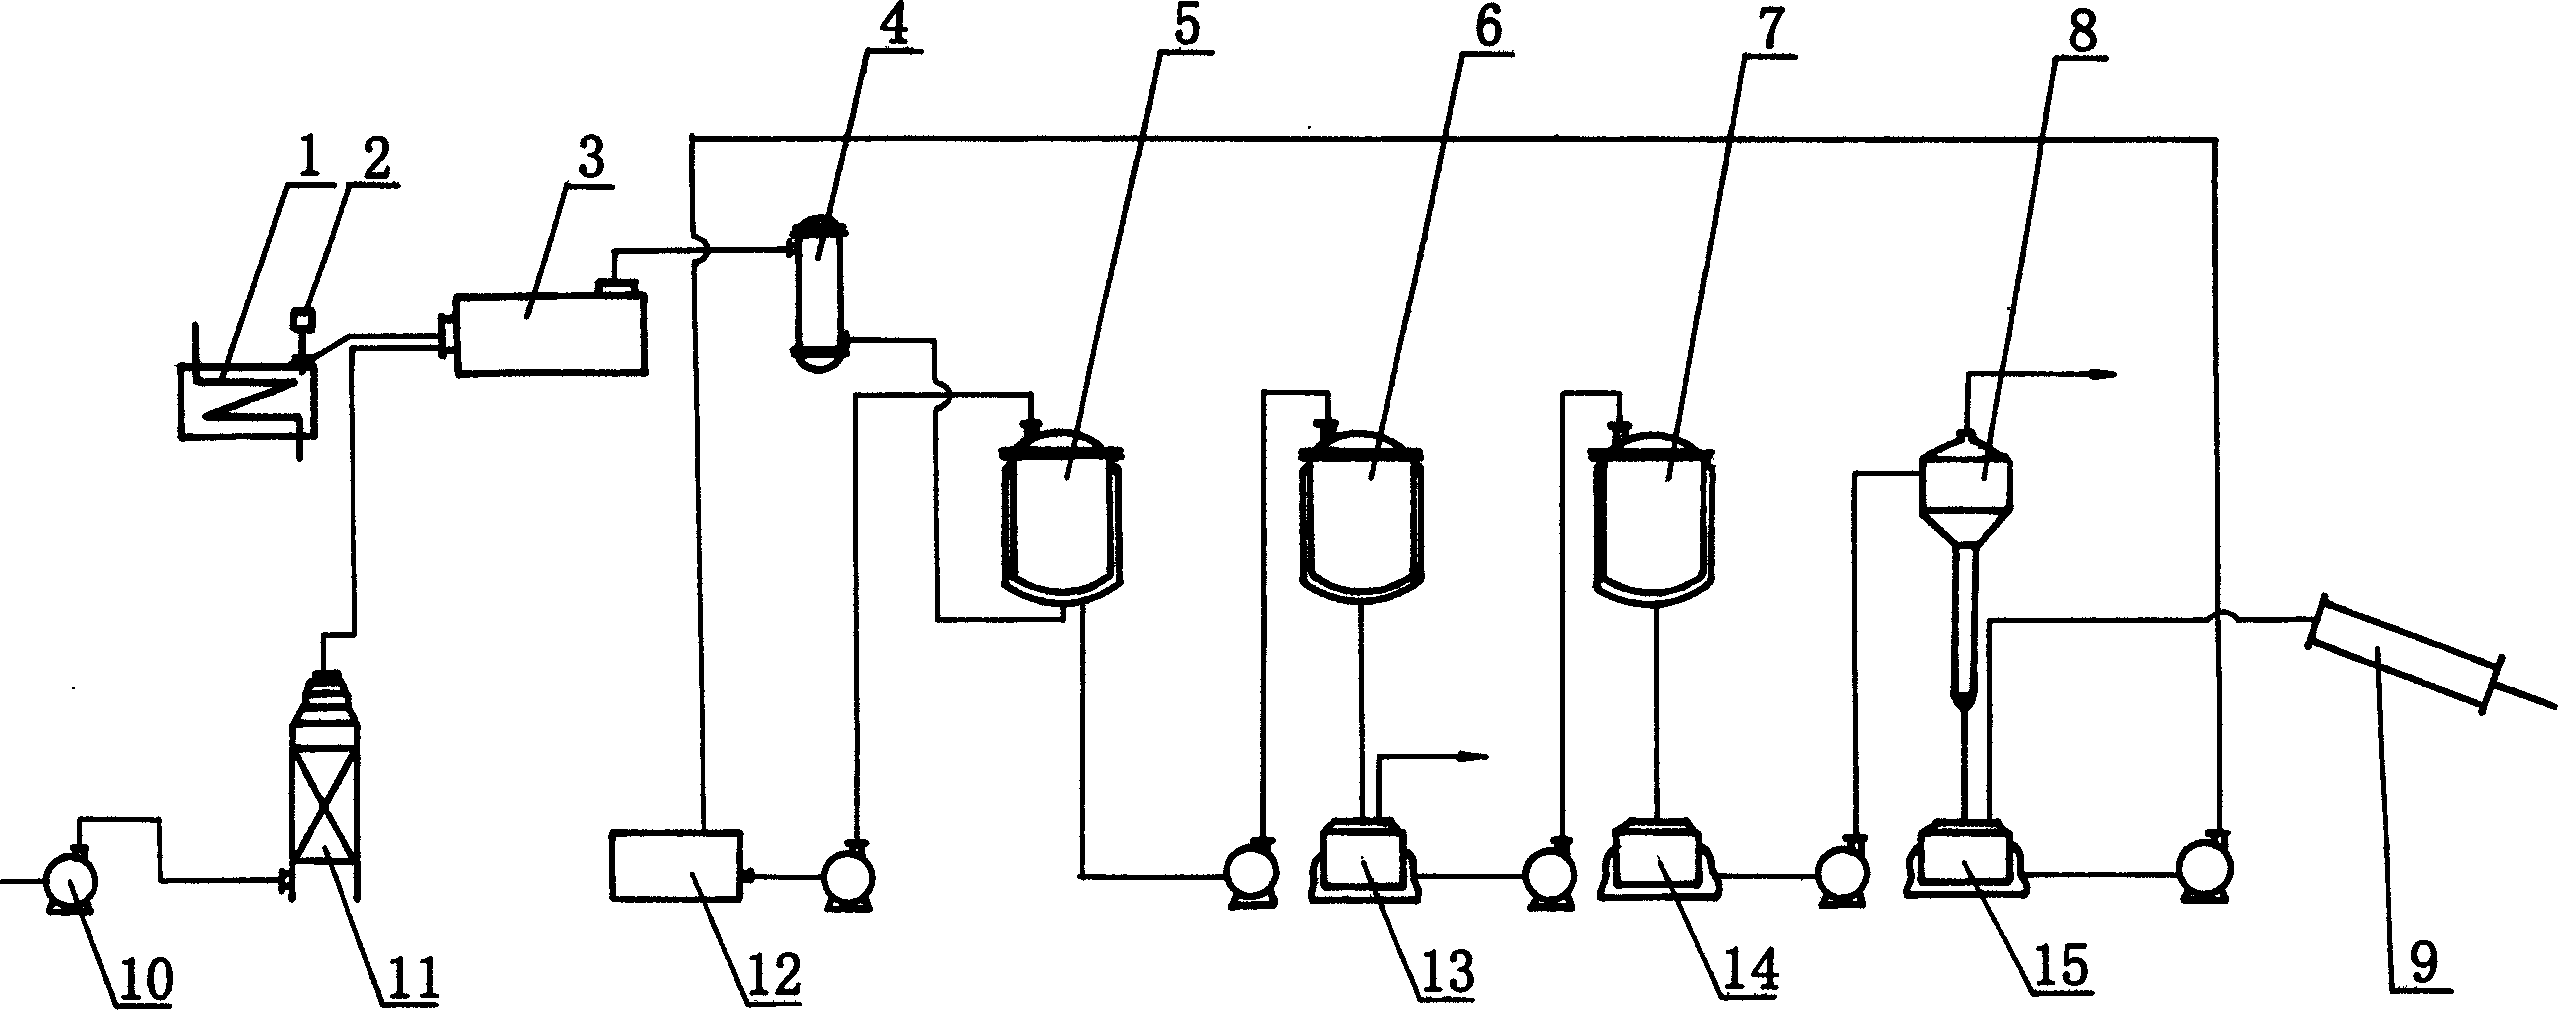 Method for preparing anhydrous sodium sulfite using industrial by-product anhydrous sodium sulfate